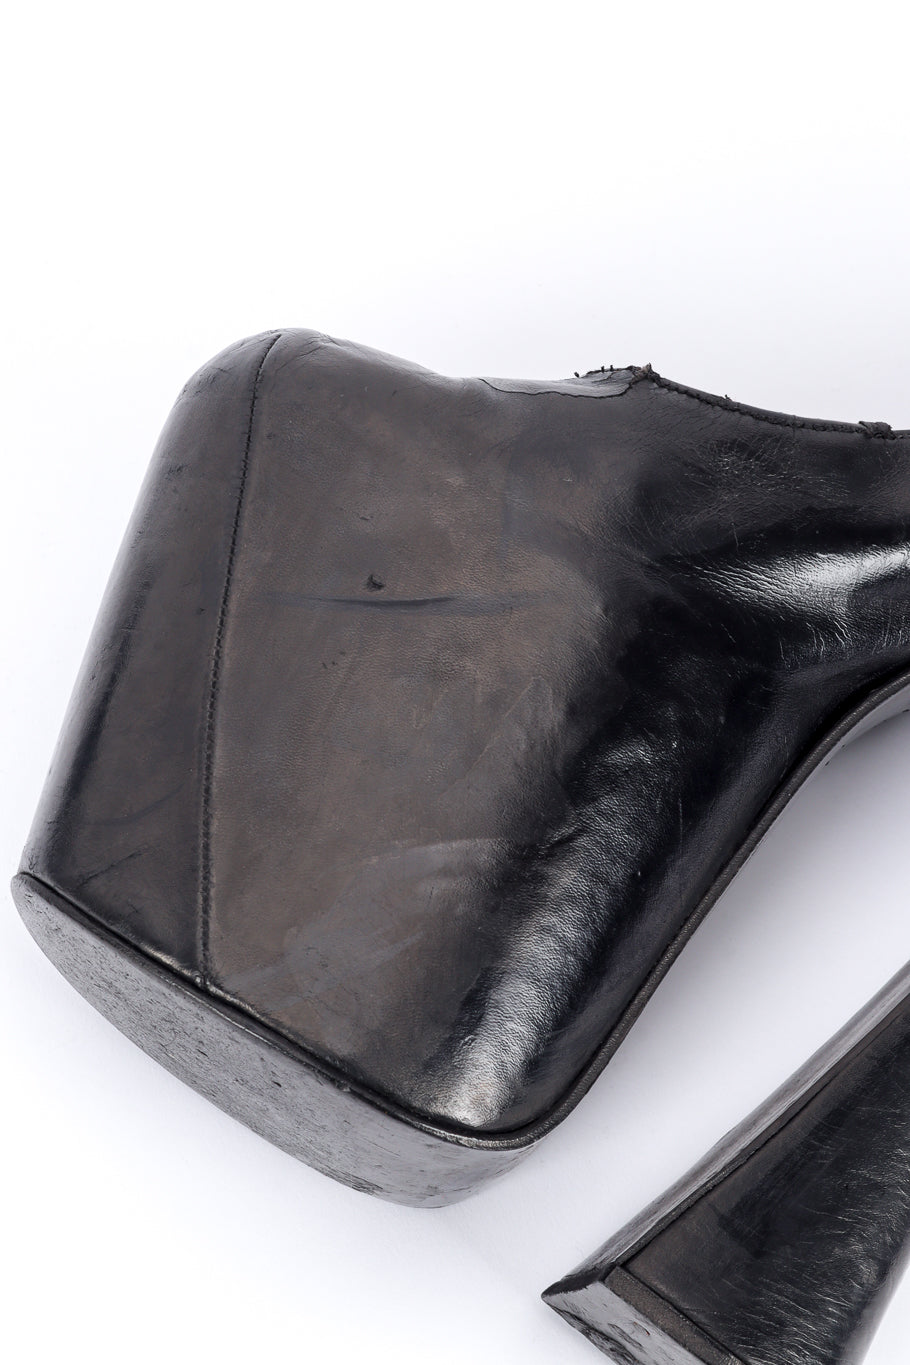 Vintage Vivienne Westwood 1993 F/W Super Elevated Leather Court Shoe right scuffed platform @recessla